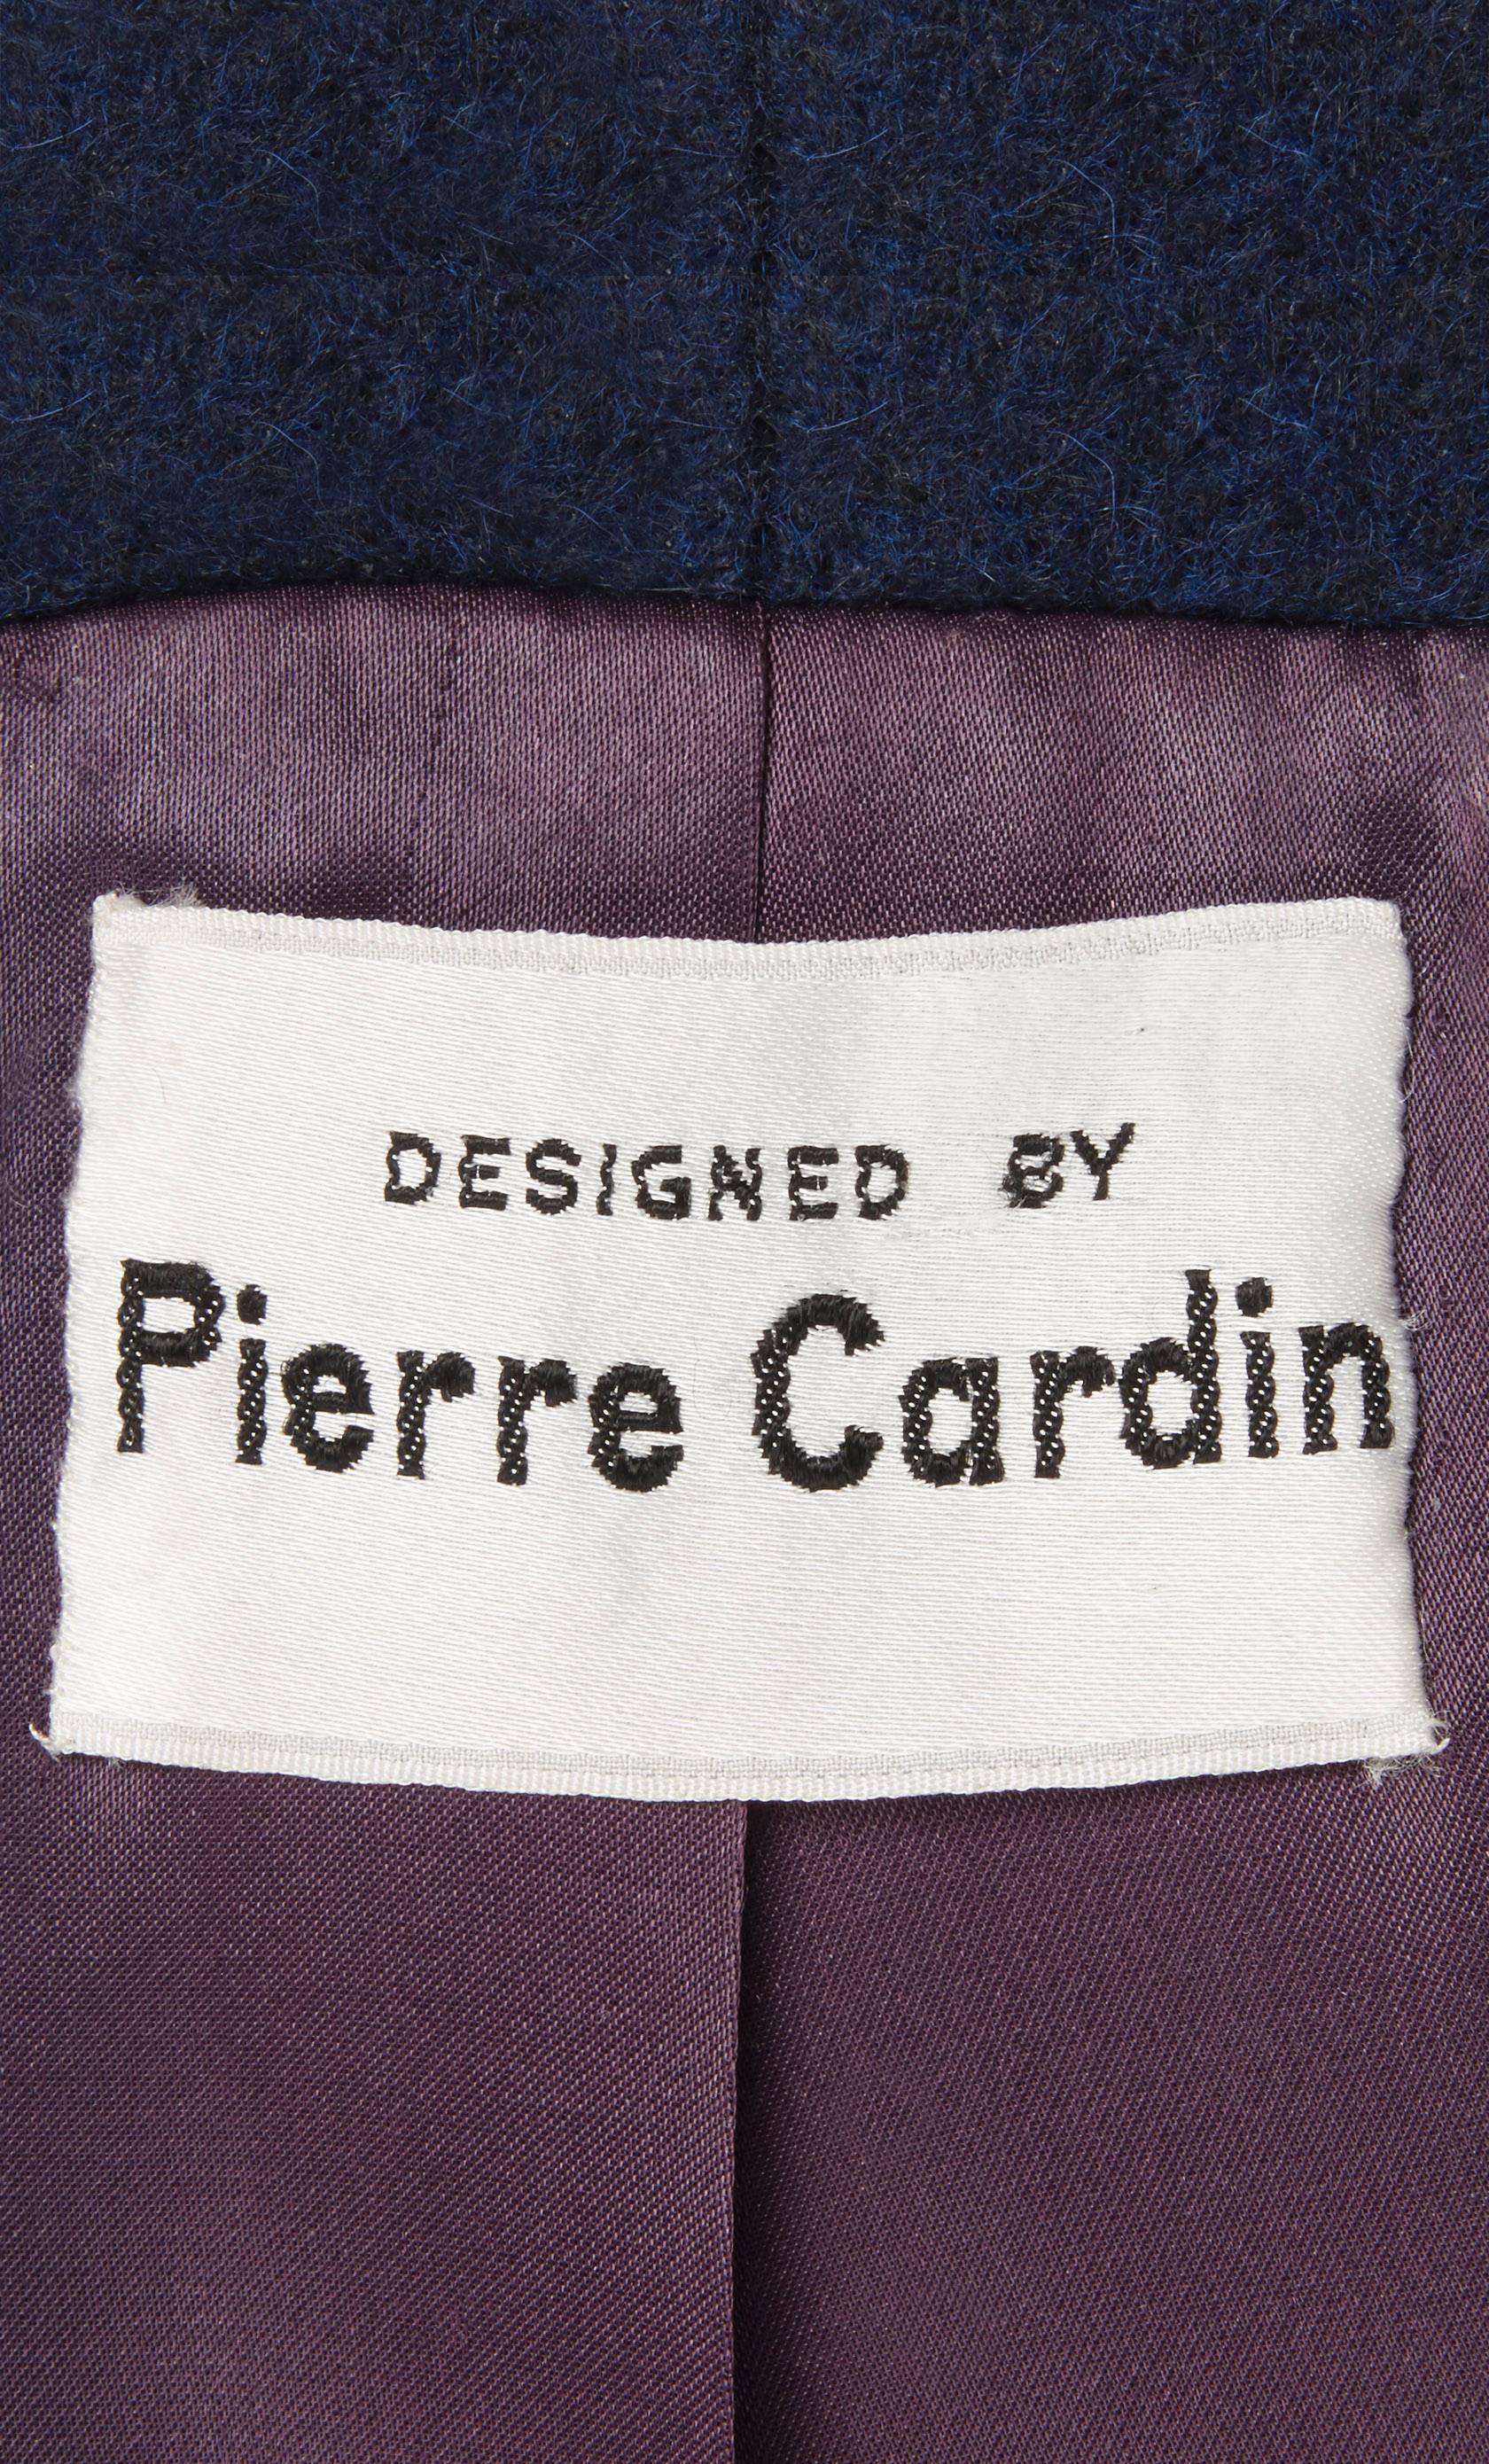 Women's Pierre Cardin navy coat, circa 1959